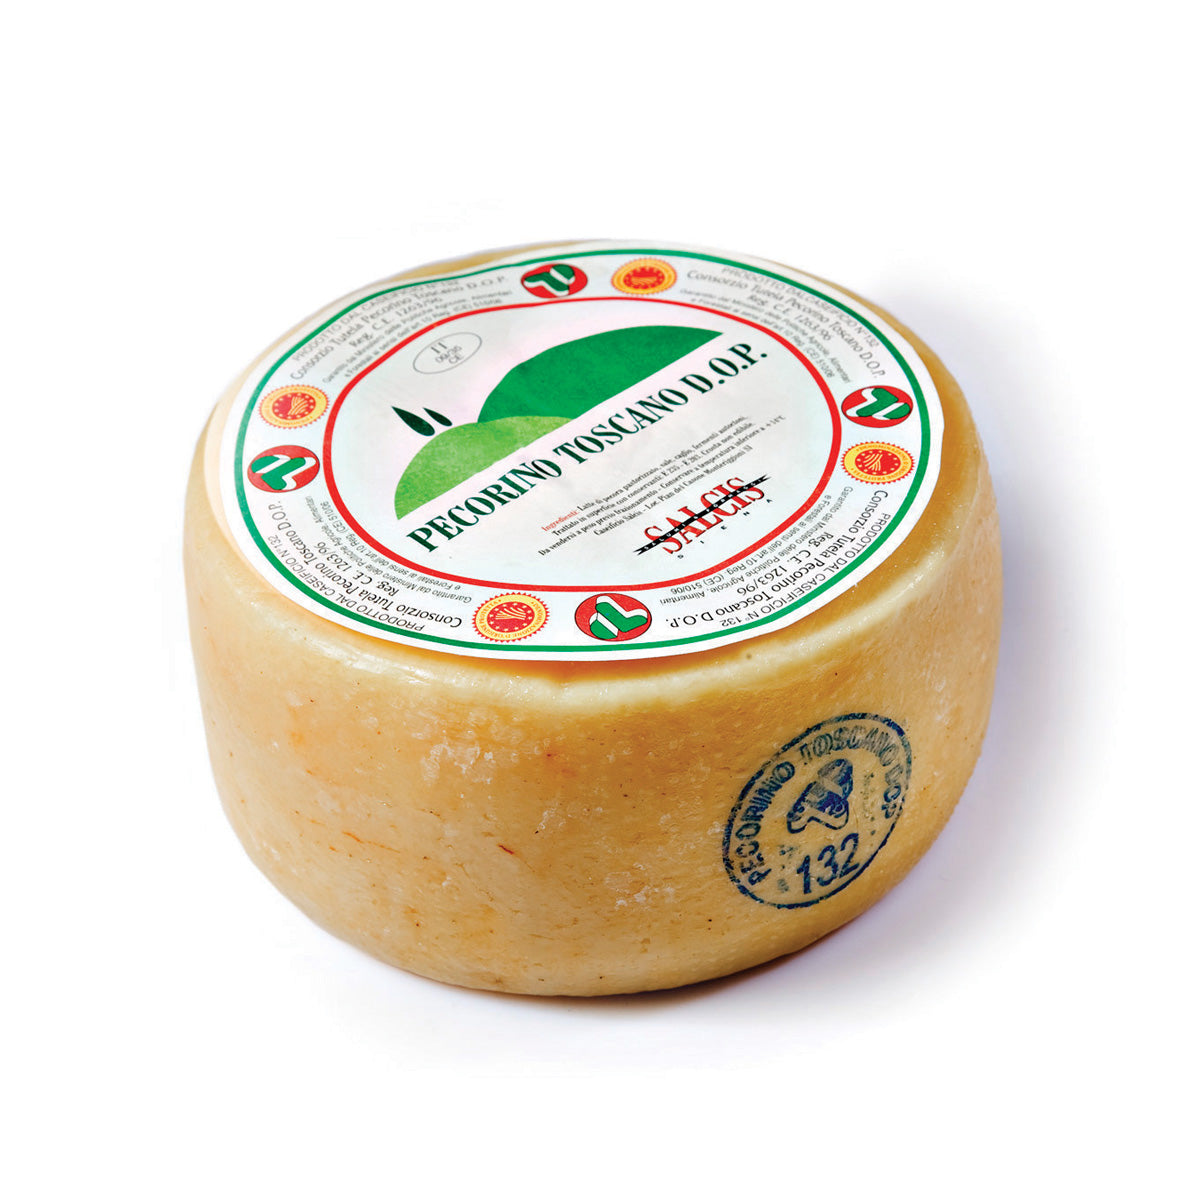 IL FORTETO Pecorino Toscano Cheese Aged 30 Days